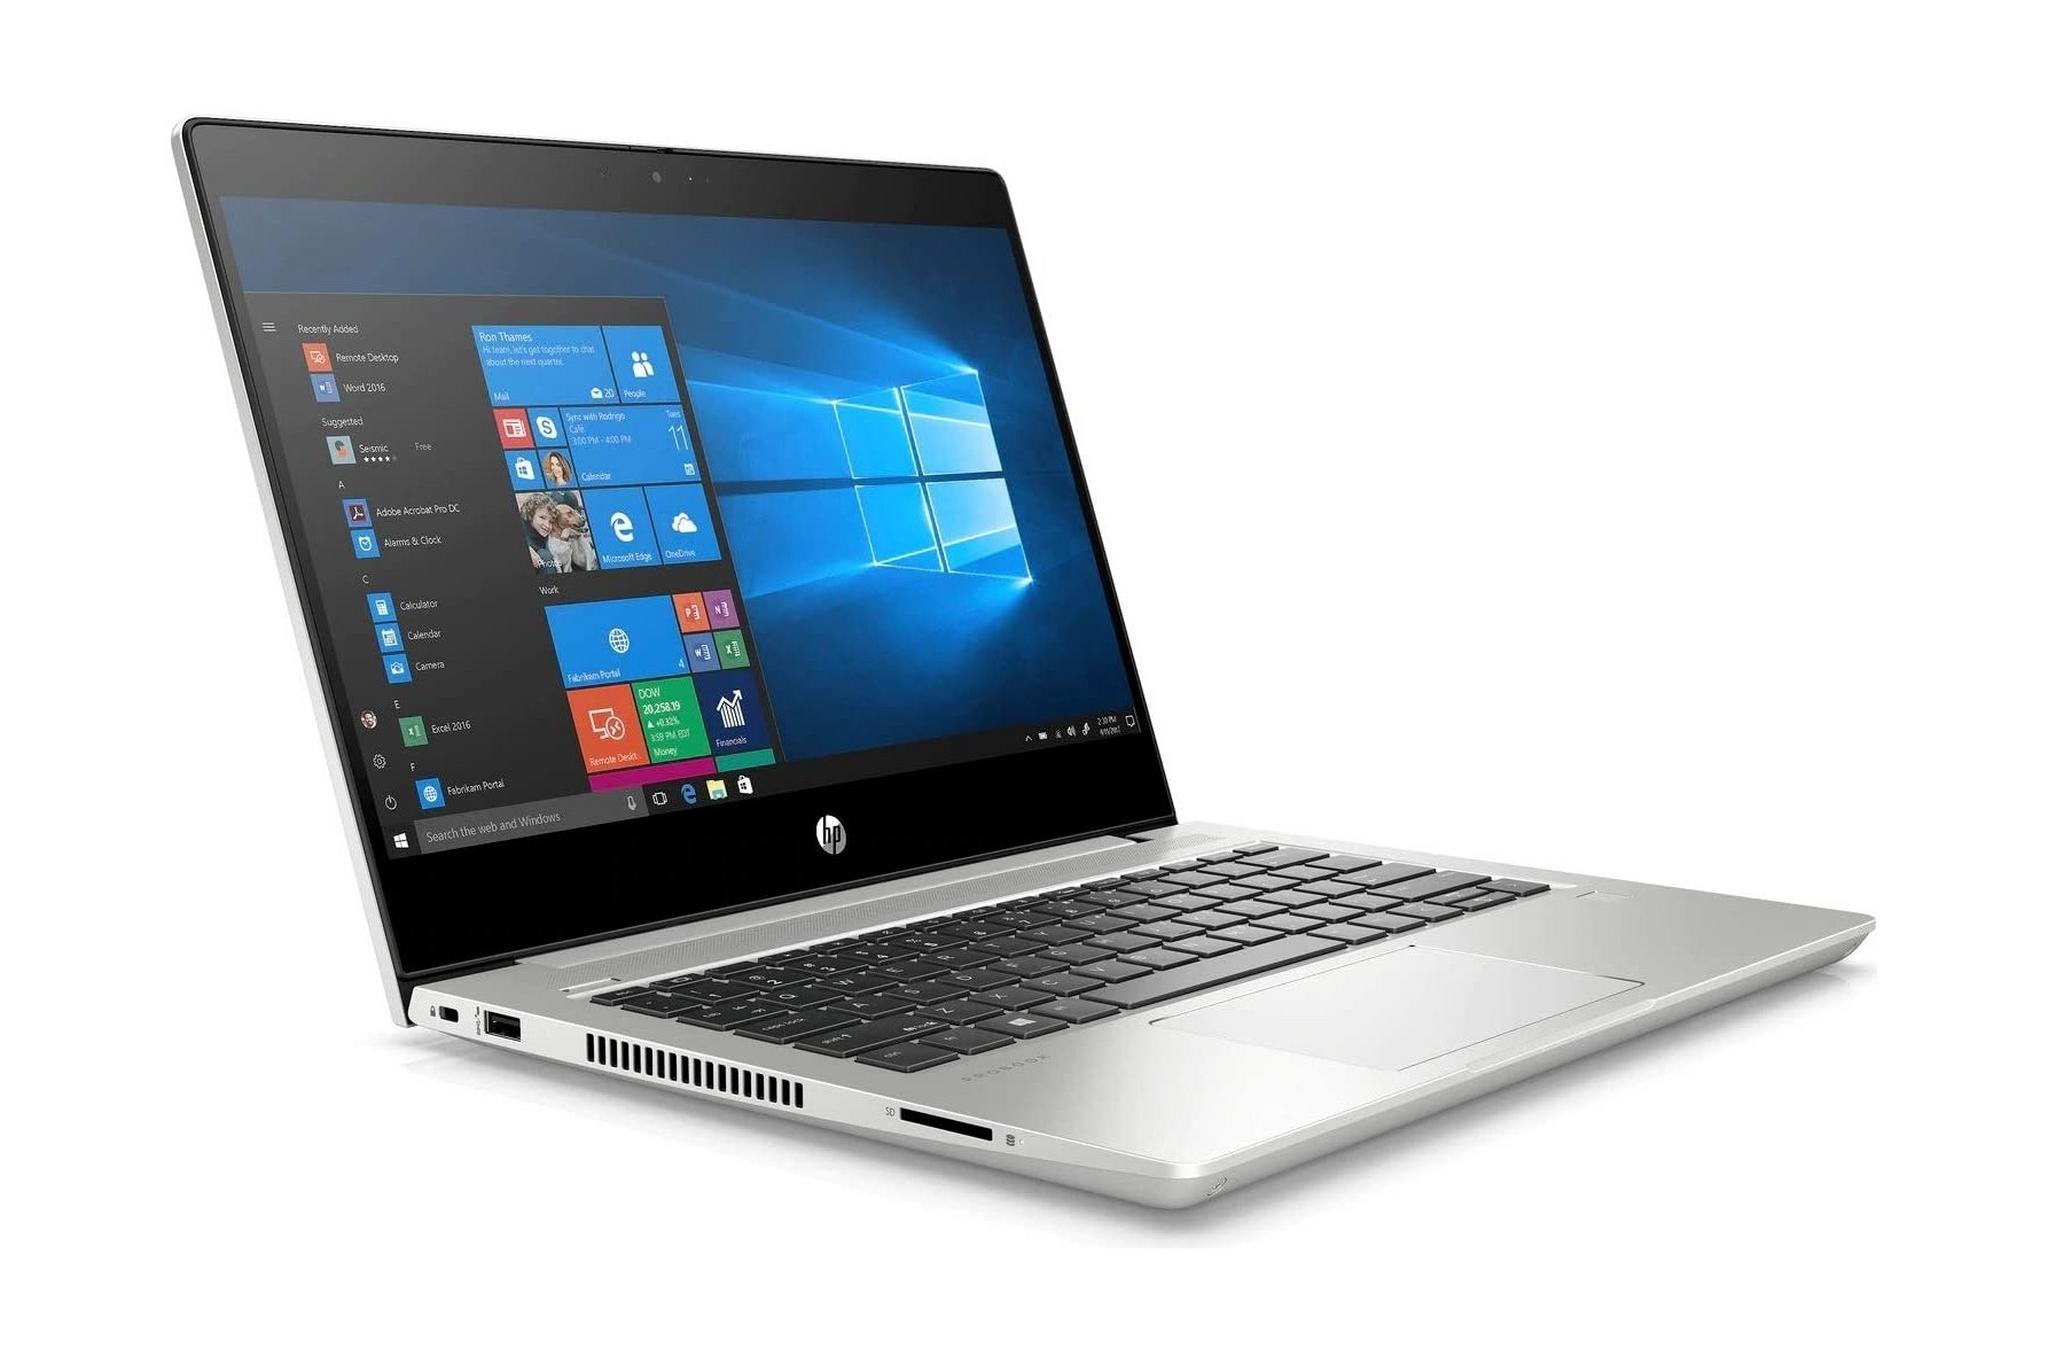 HP ProBook 430 Core i5 4GB RAM 1 TB HDD 13.3" SMB Laptop (8MG82EA#ABV) - Silver